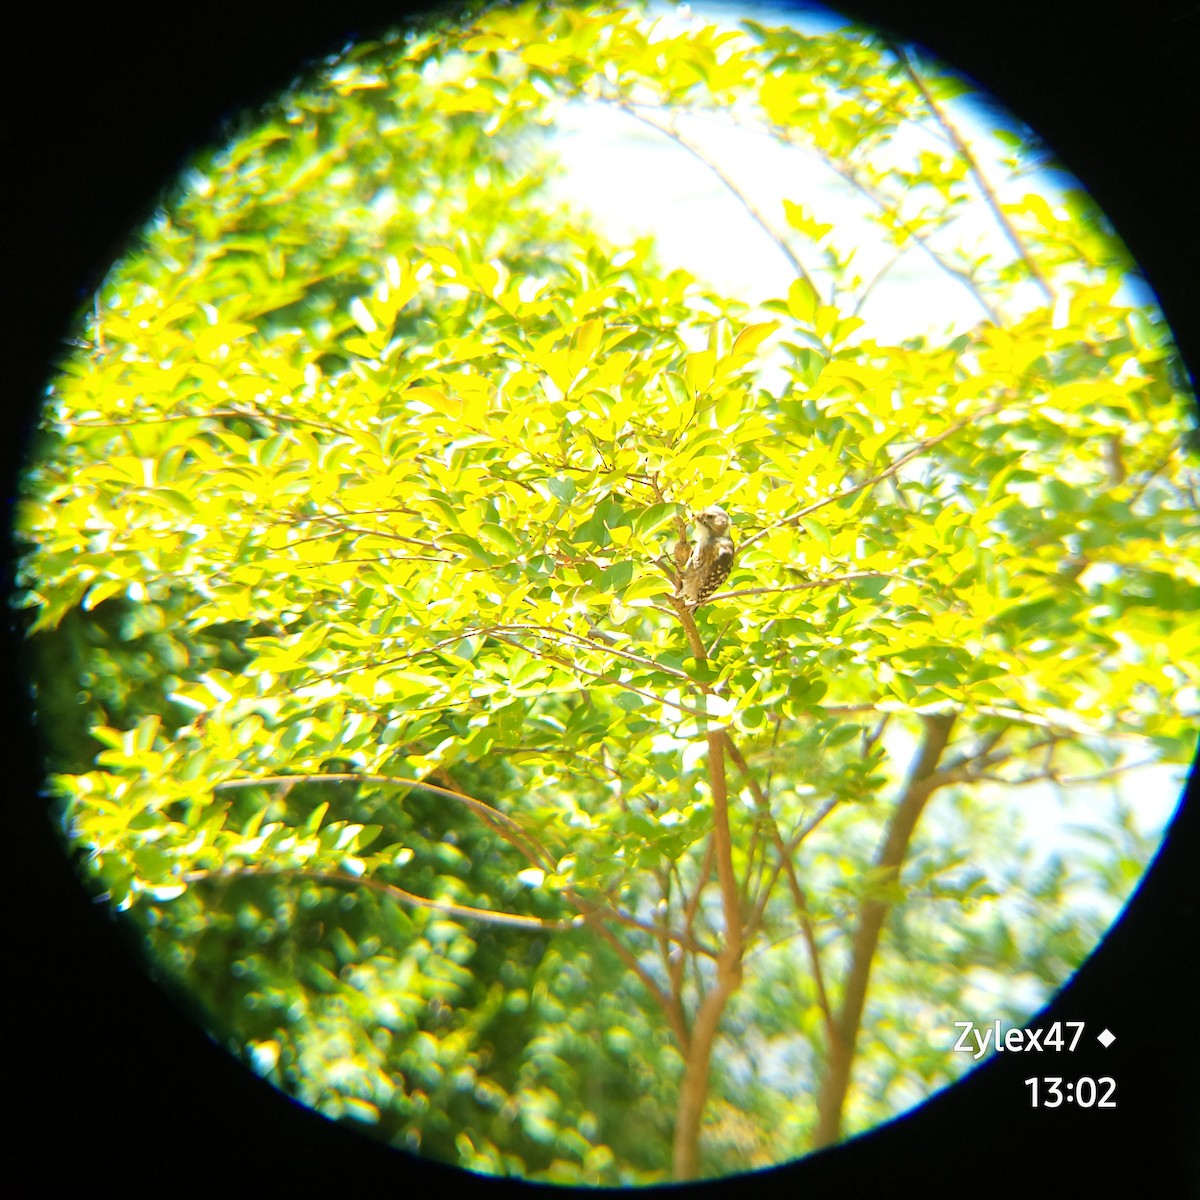 Japanese Pygmy Woodpecker - Dusky Thrush